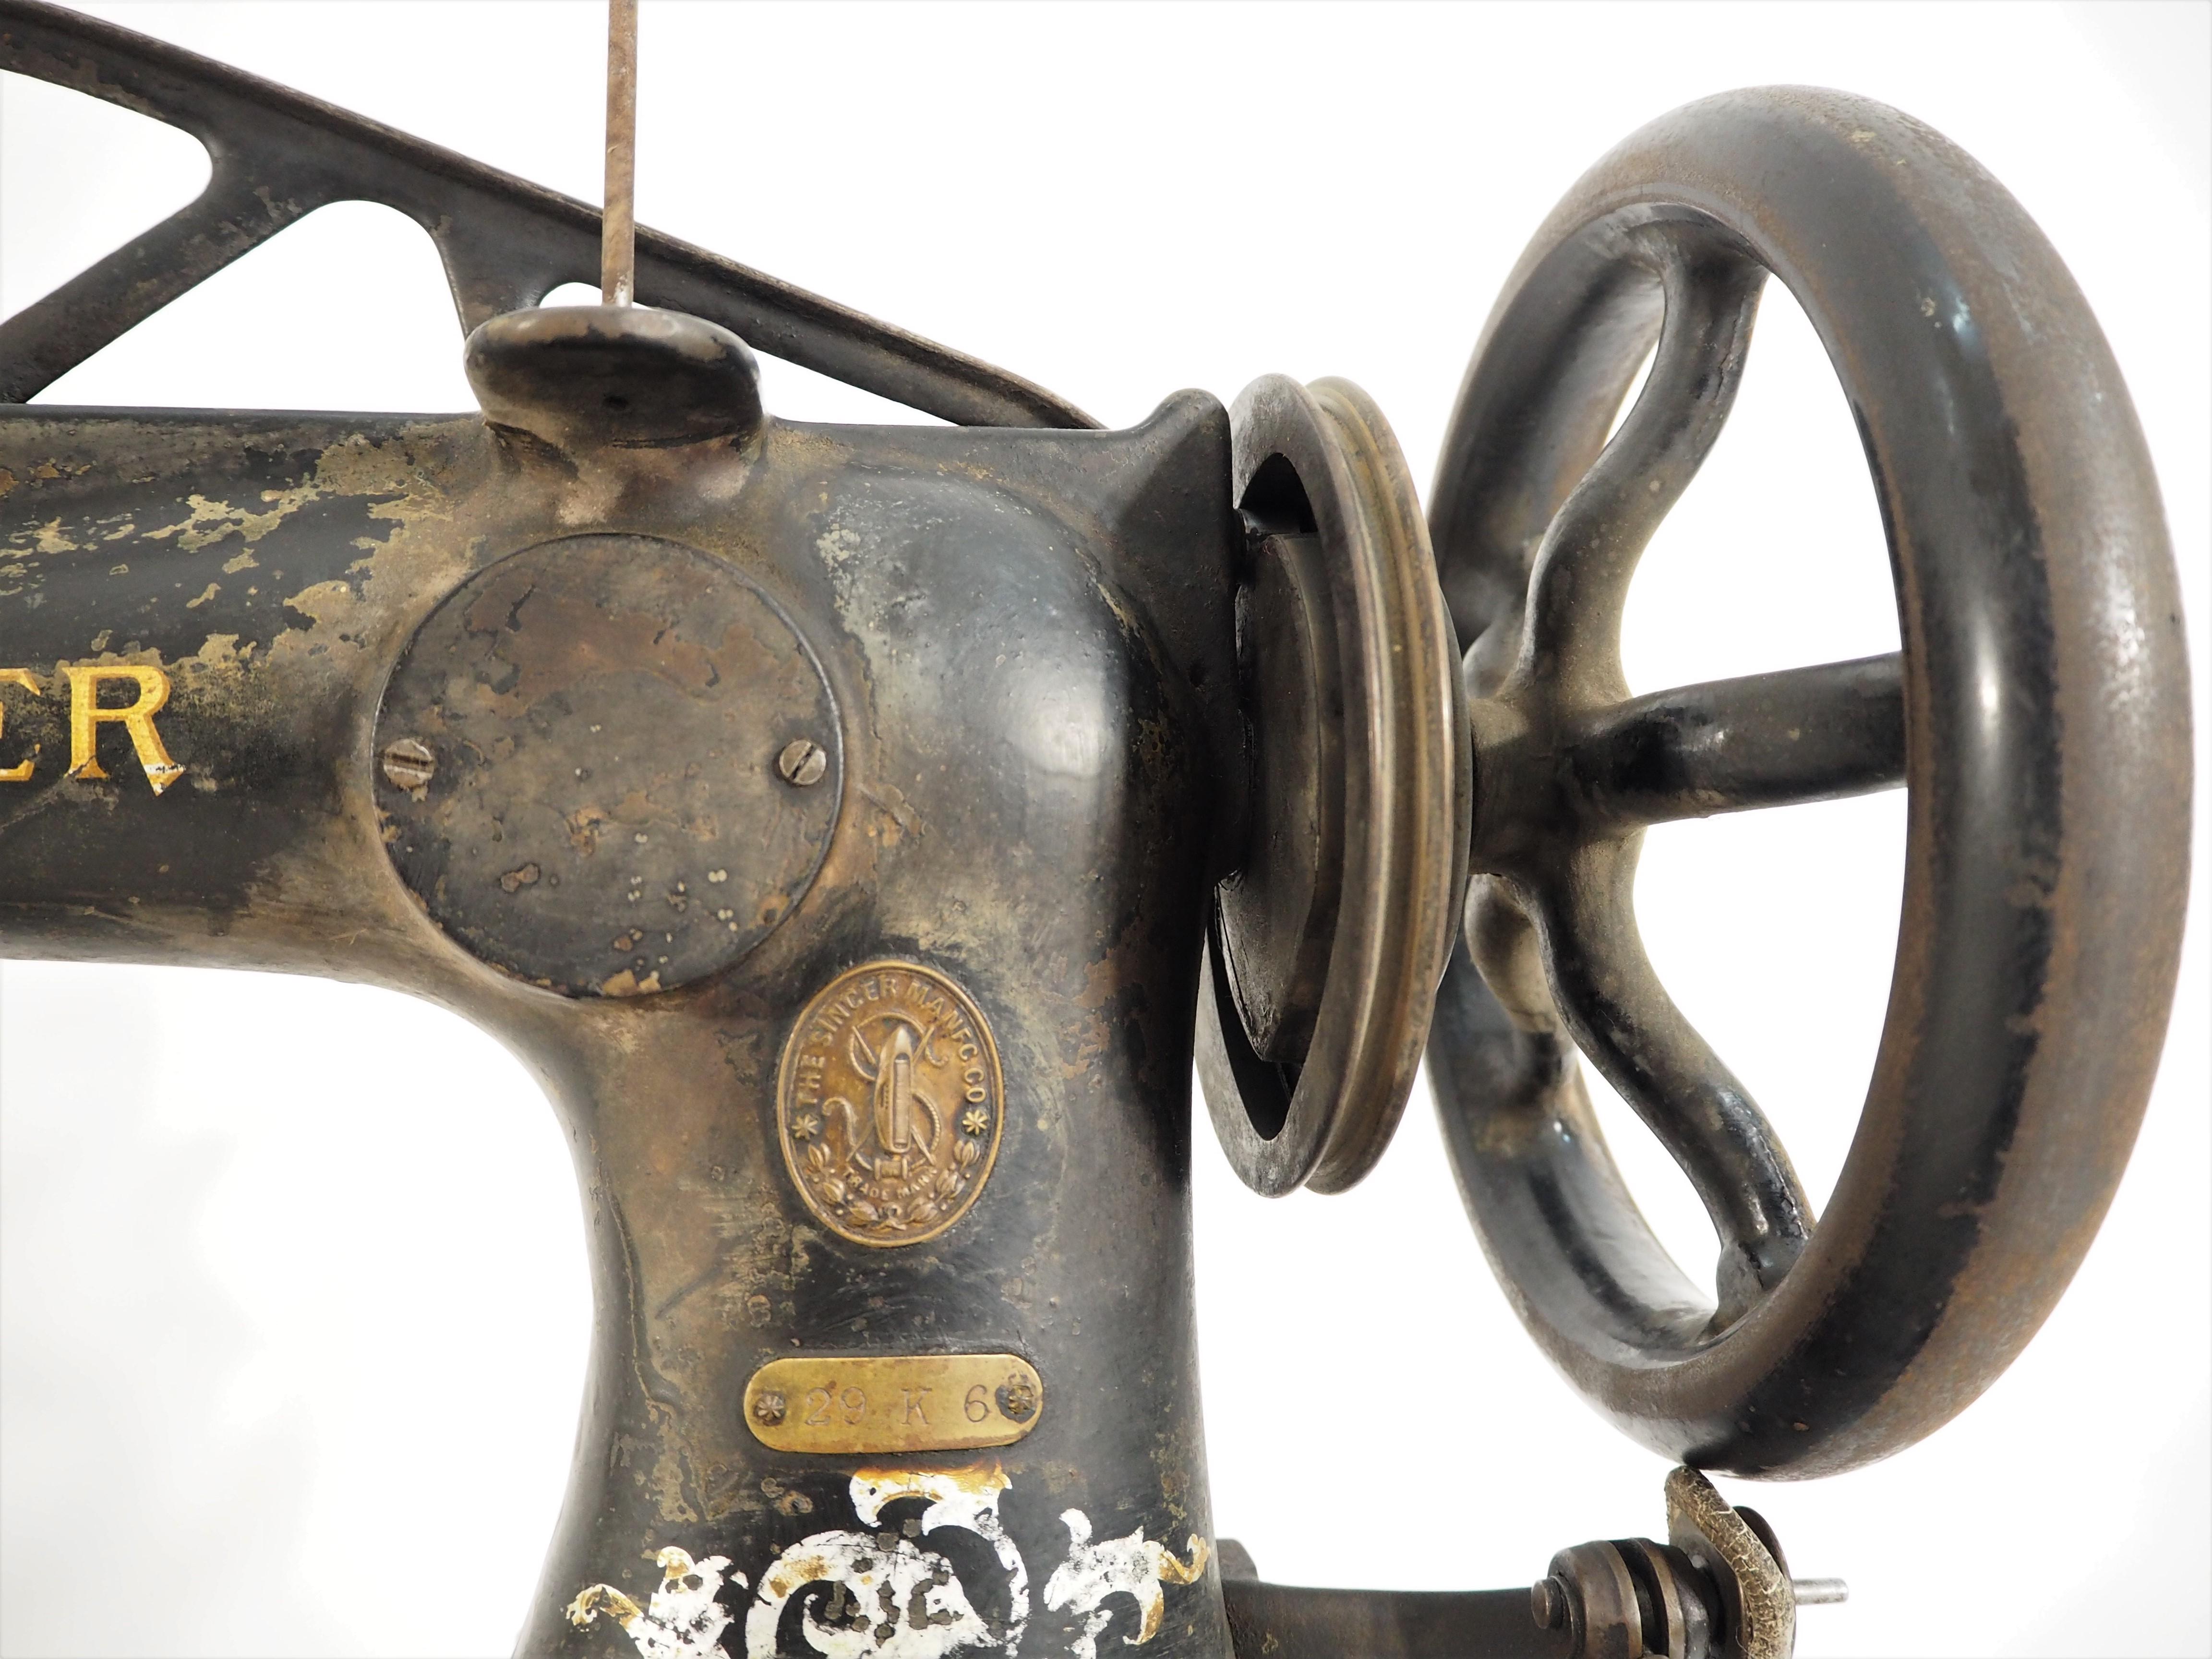 Scottish Sewing Machine from Singer, circa 1920s